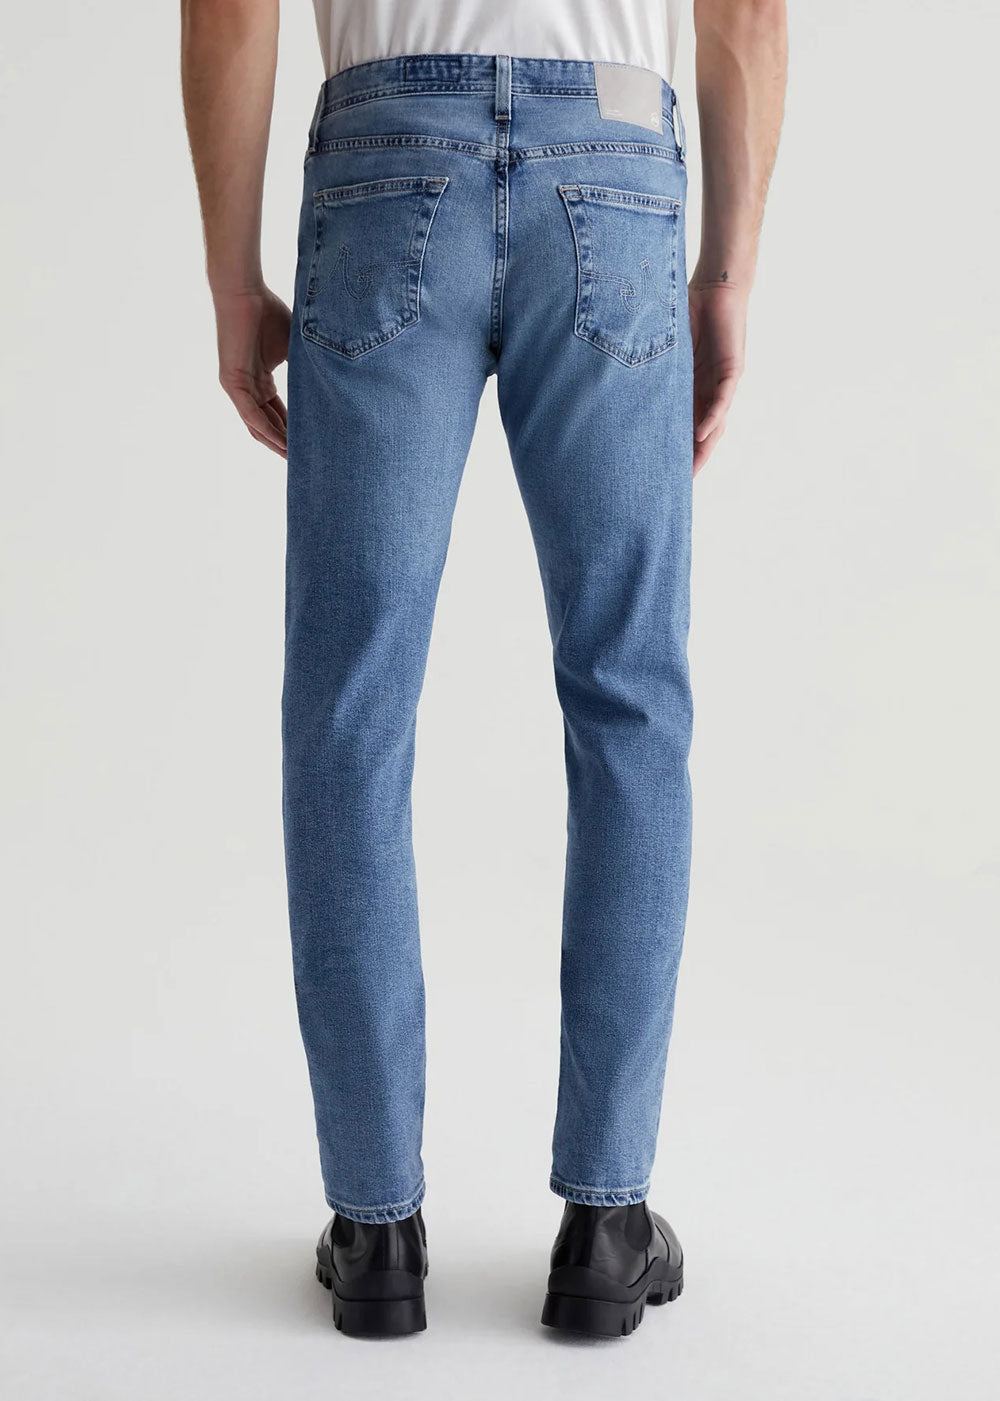 Tellis Modern Slim Jean - Vapor Wash Novo - AG Jeans - Danali - 1783DASNOVO